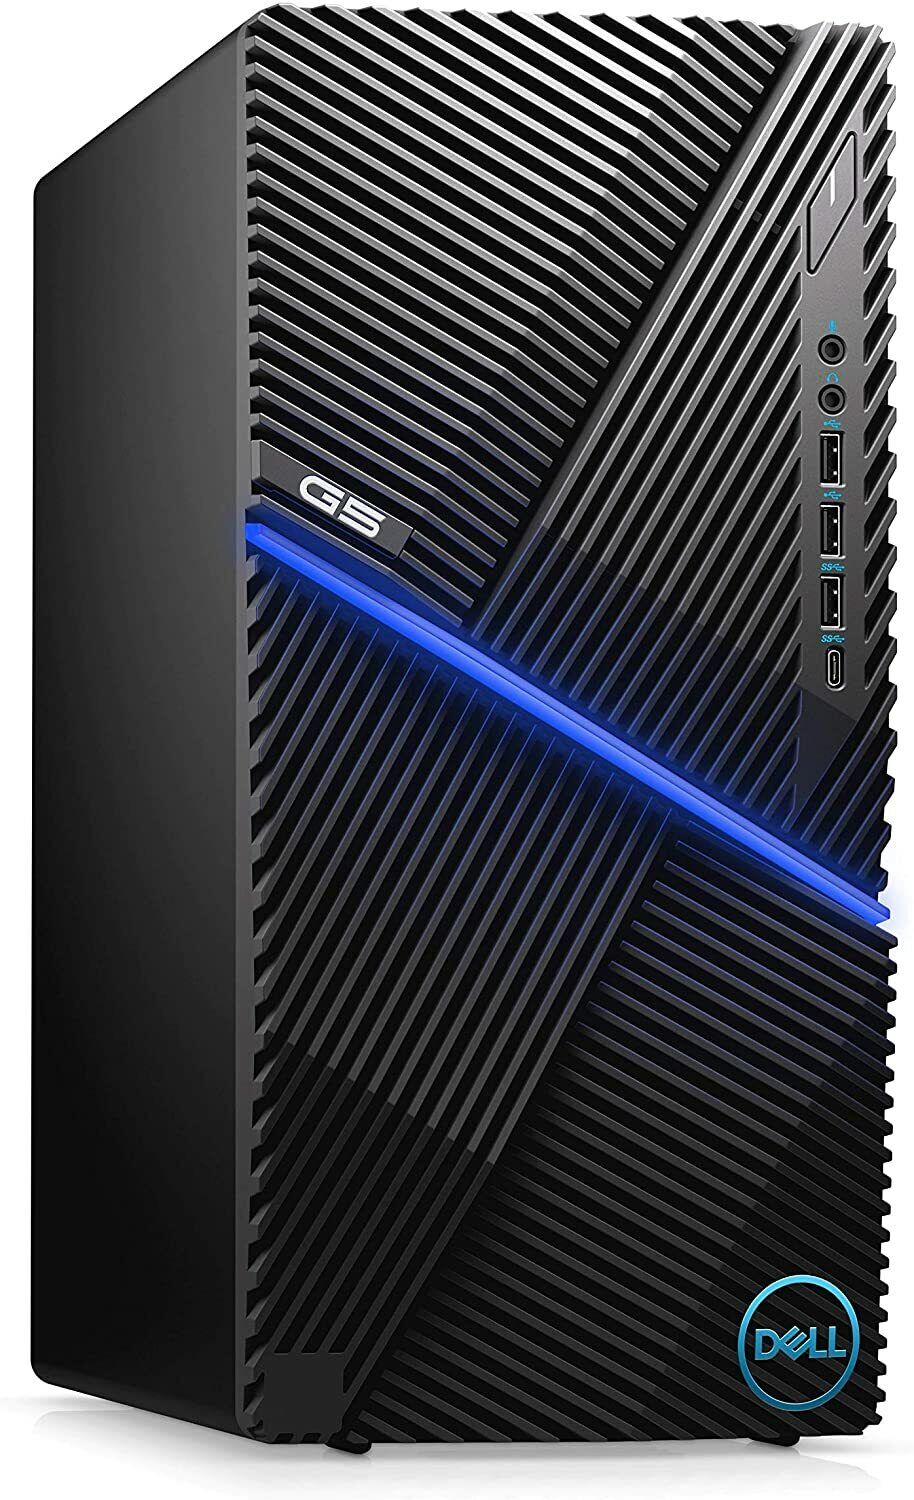 2021 Dell G5 Gaming Desktop Intel 10th Gen i3-10100 8GB RAM 1TB HD -NO GPU